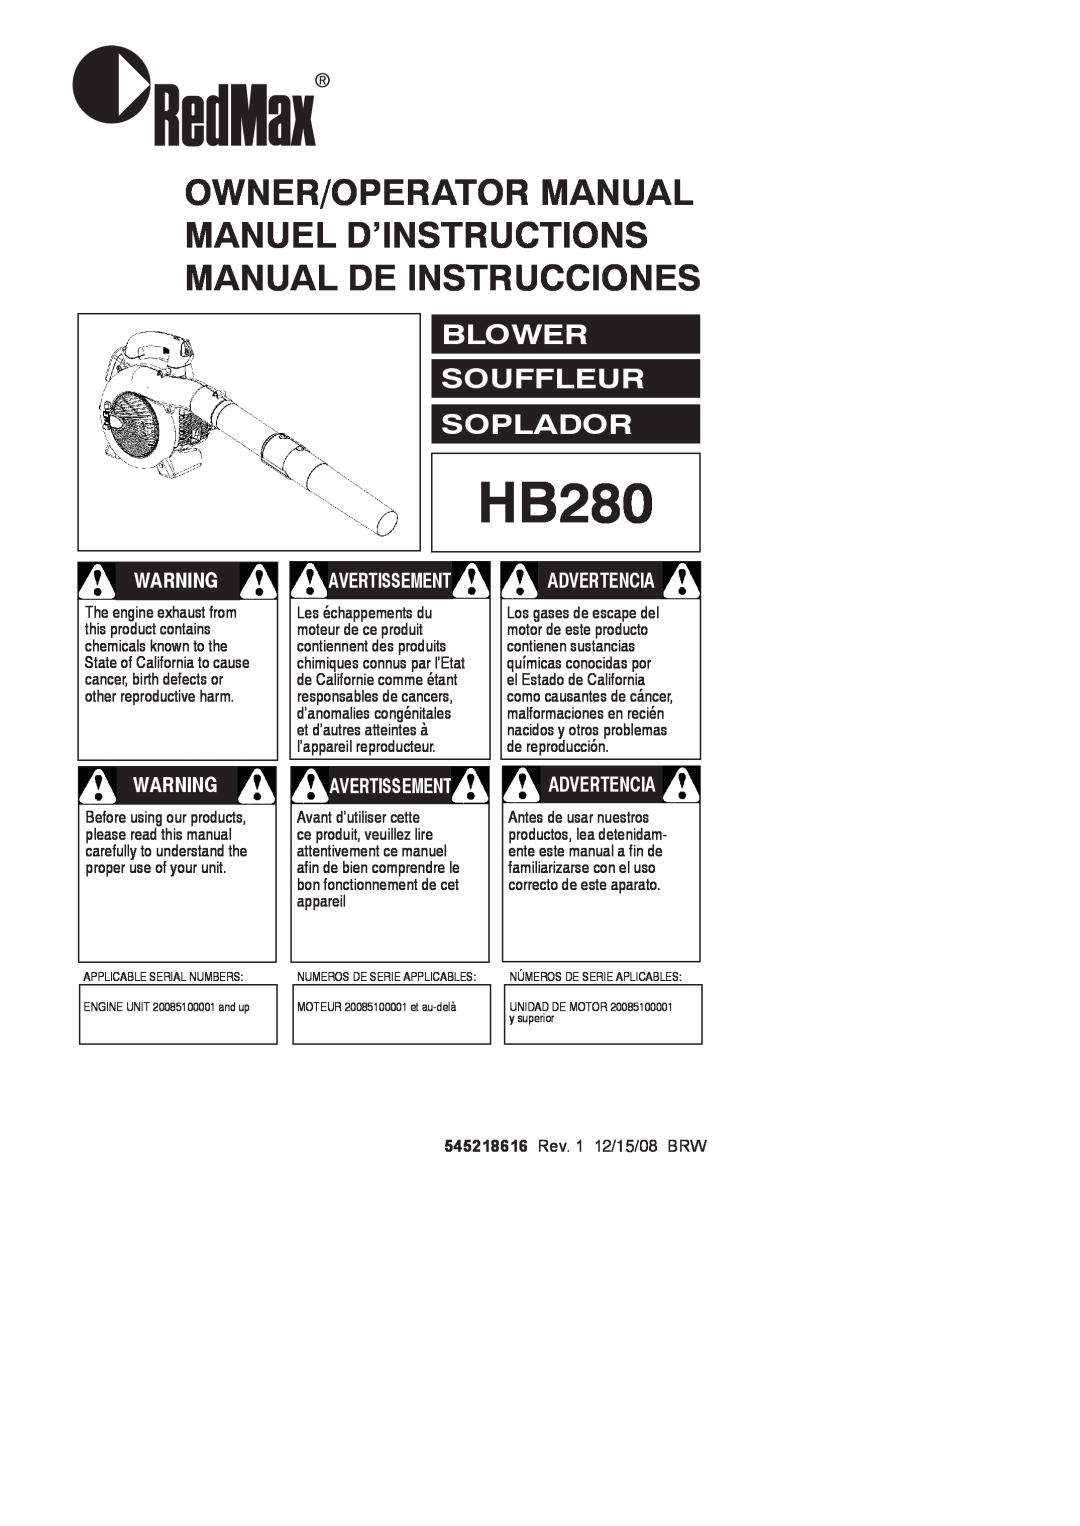 RedMax HB280 manual Blower Souffleur Soplador, Avertissement, Advertencia, 545218616 Rev. 1 12/15/08 BRW 